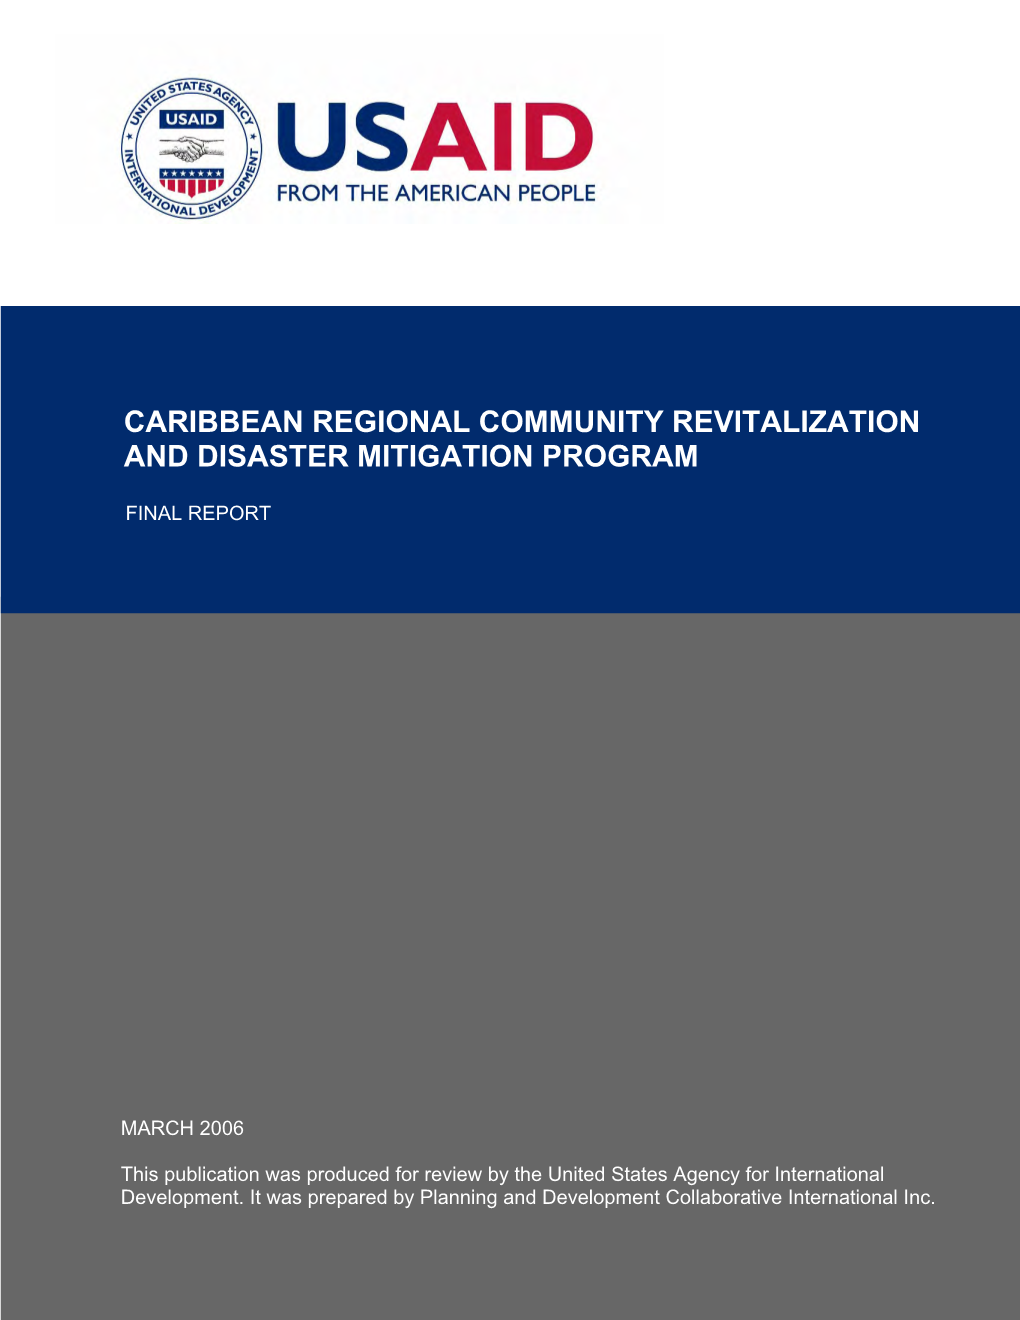 Caribbean Regional Community Revitalization and Disaster Mitigation Program